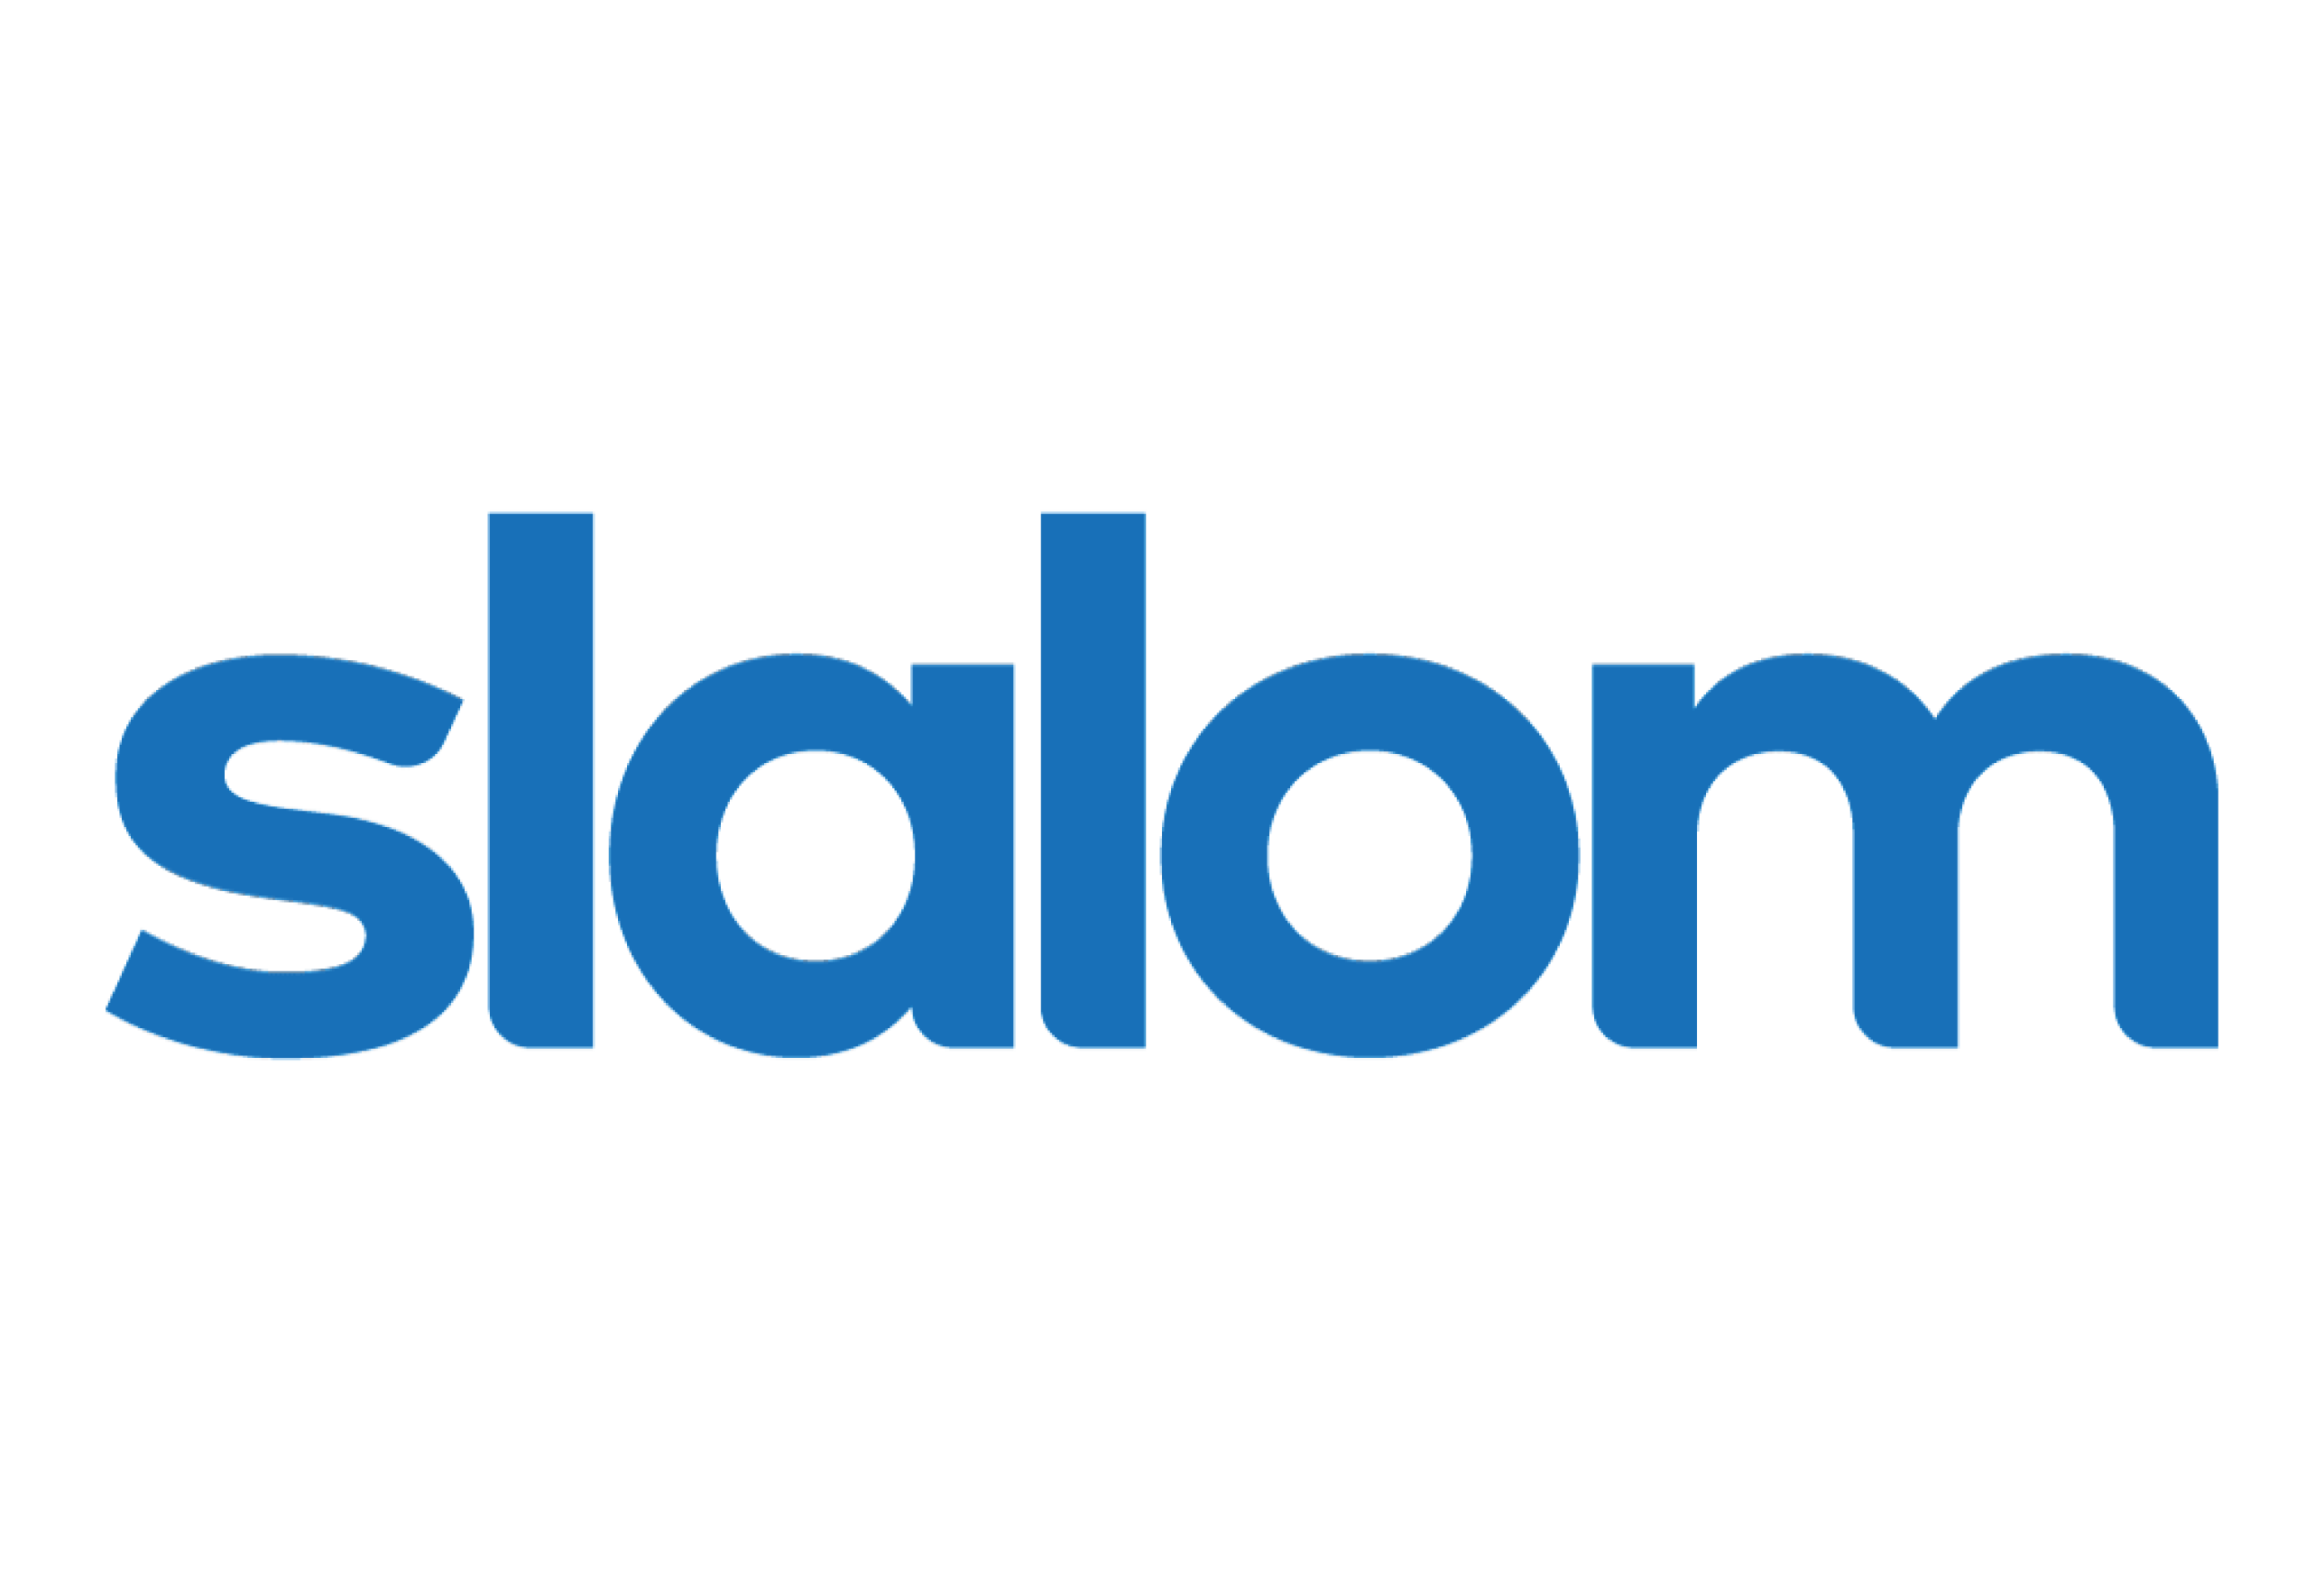 Slalom logo